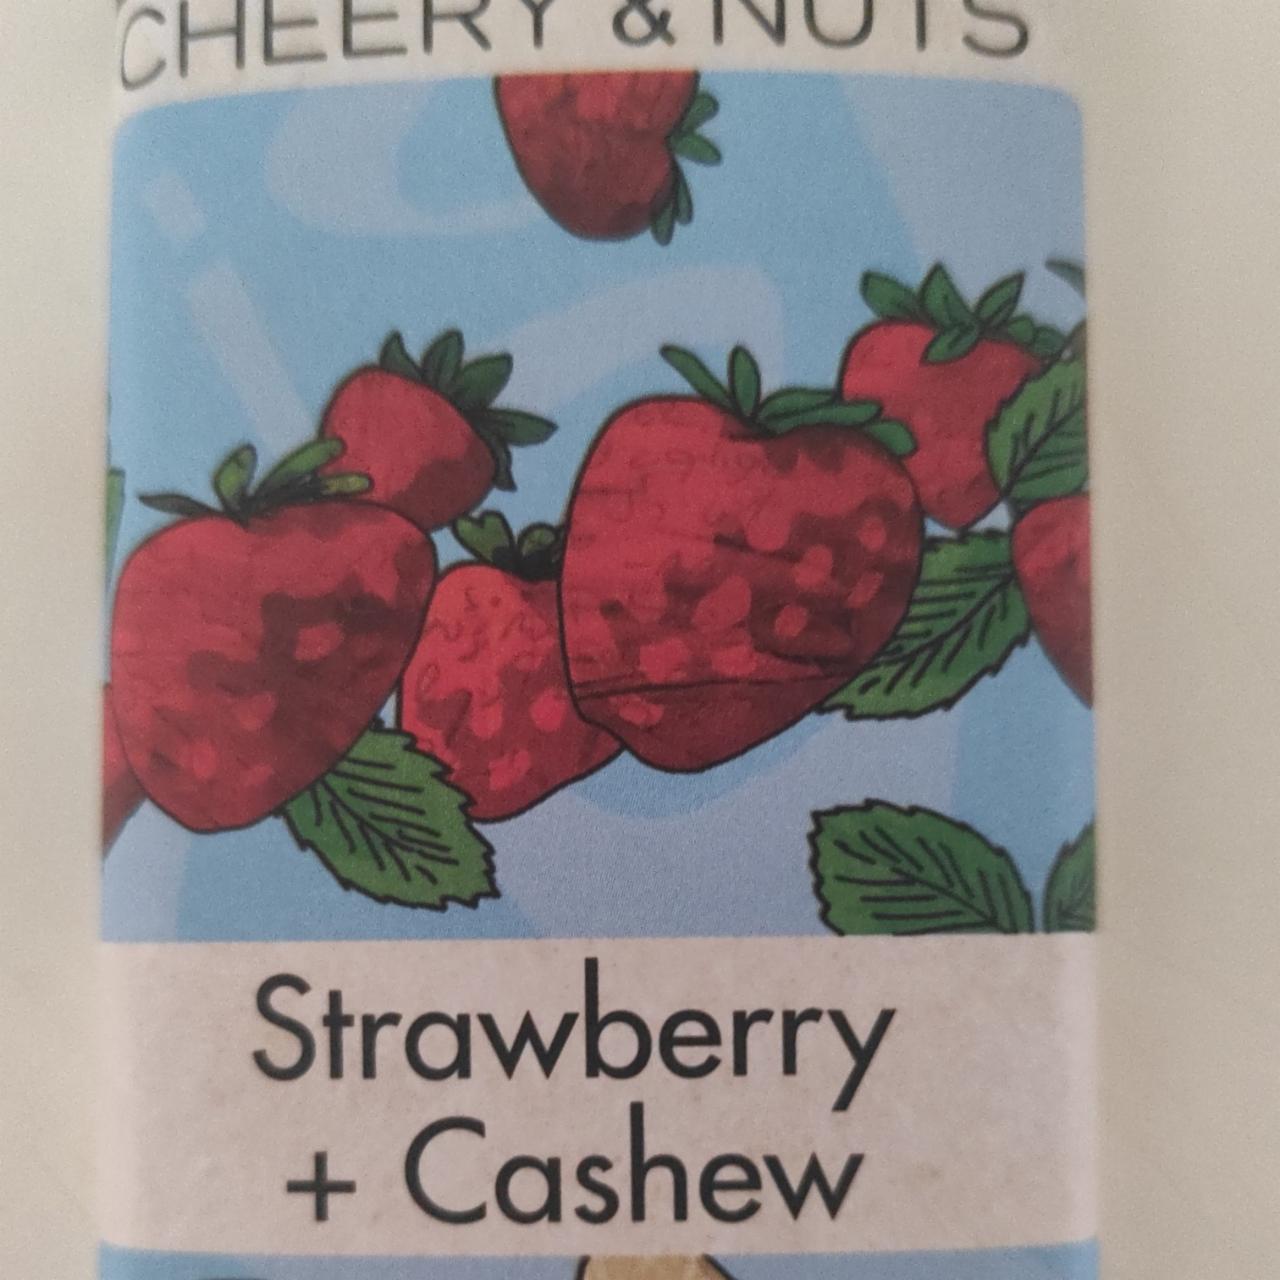 Fotografie - Bio Cheery & Nuts Strawberry + Cashew Zotter